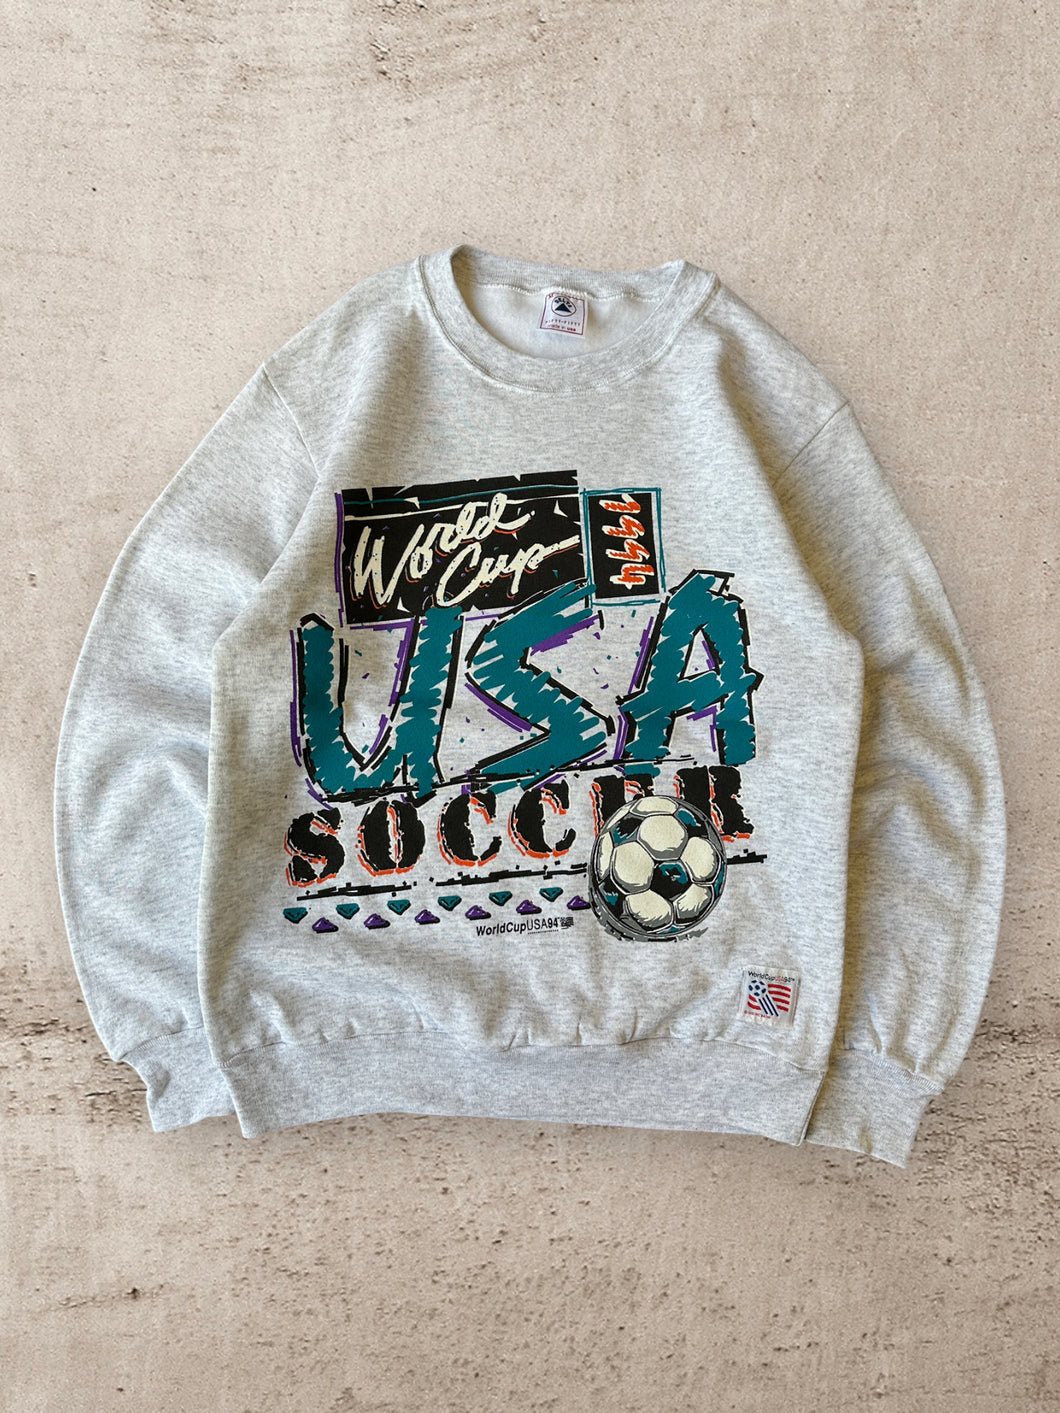 1994 World Cup USA Soccer Crewneck - Medium